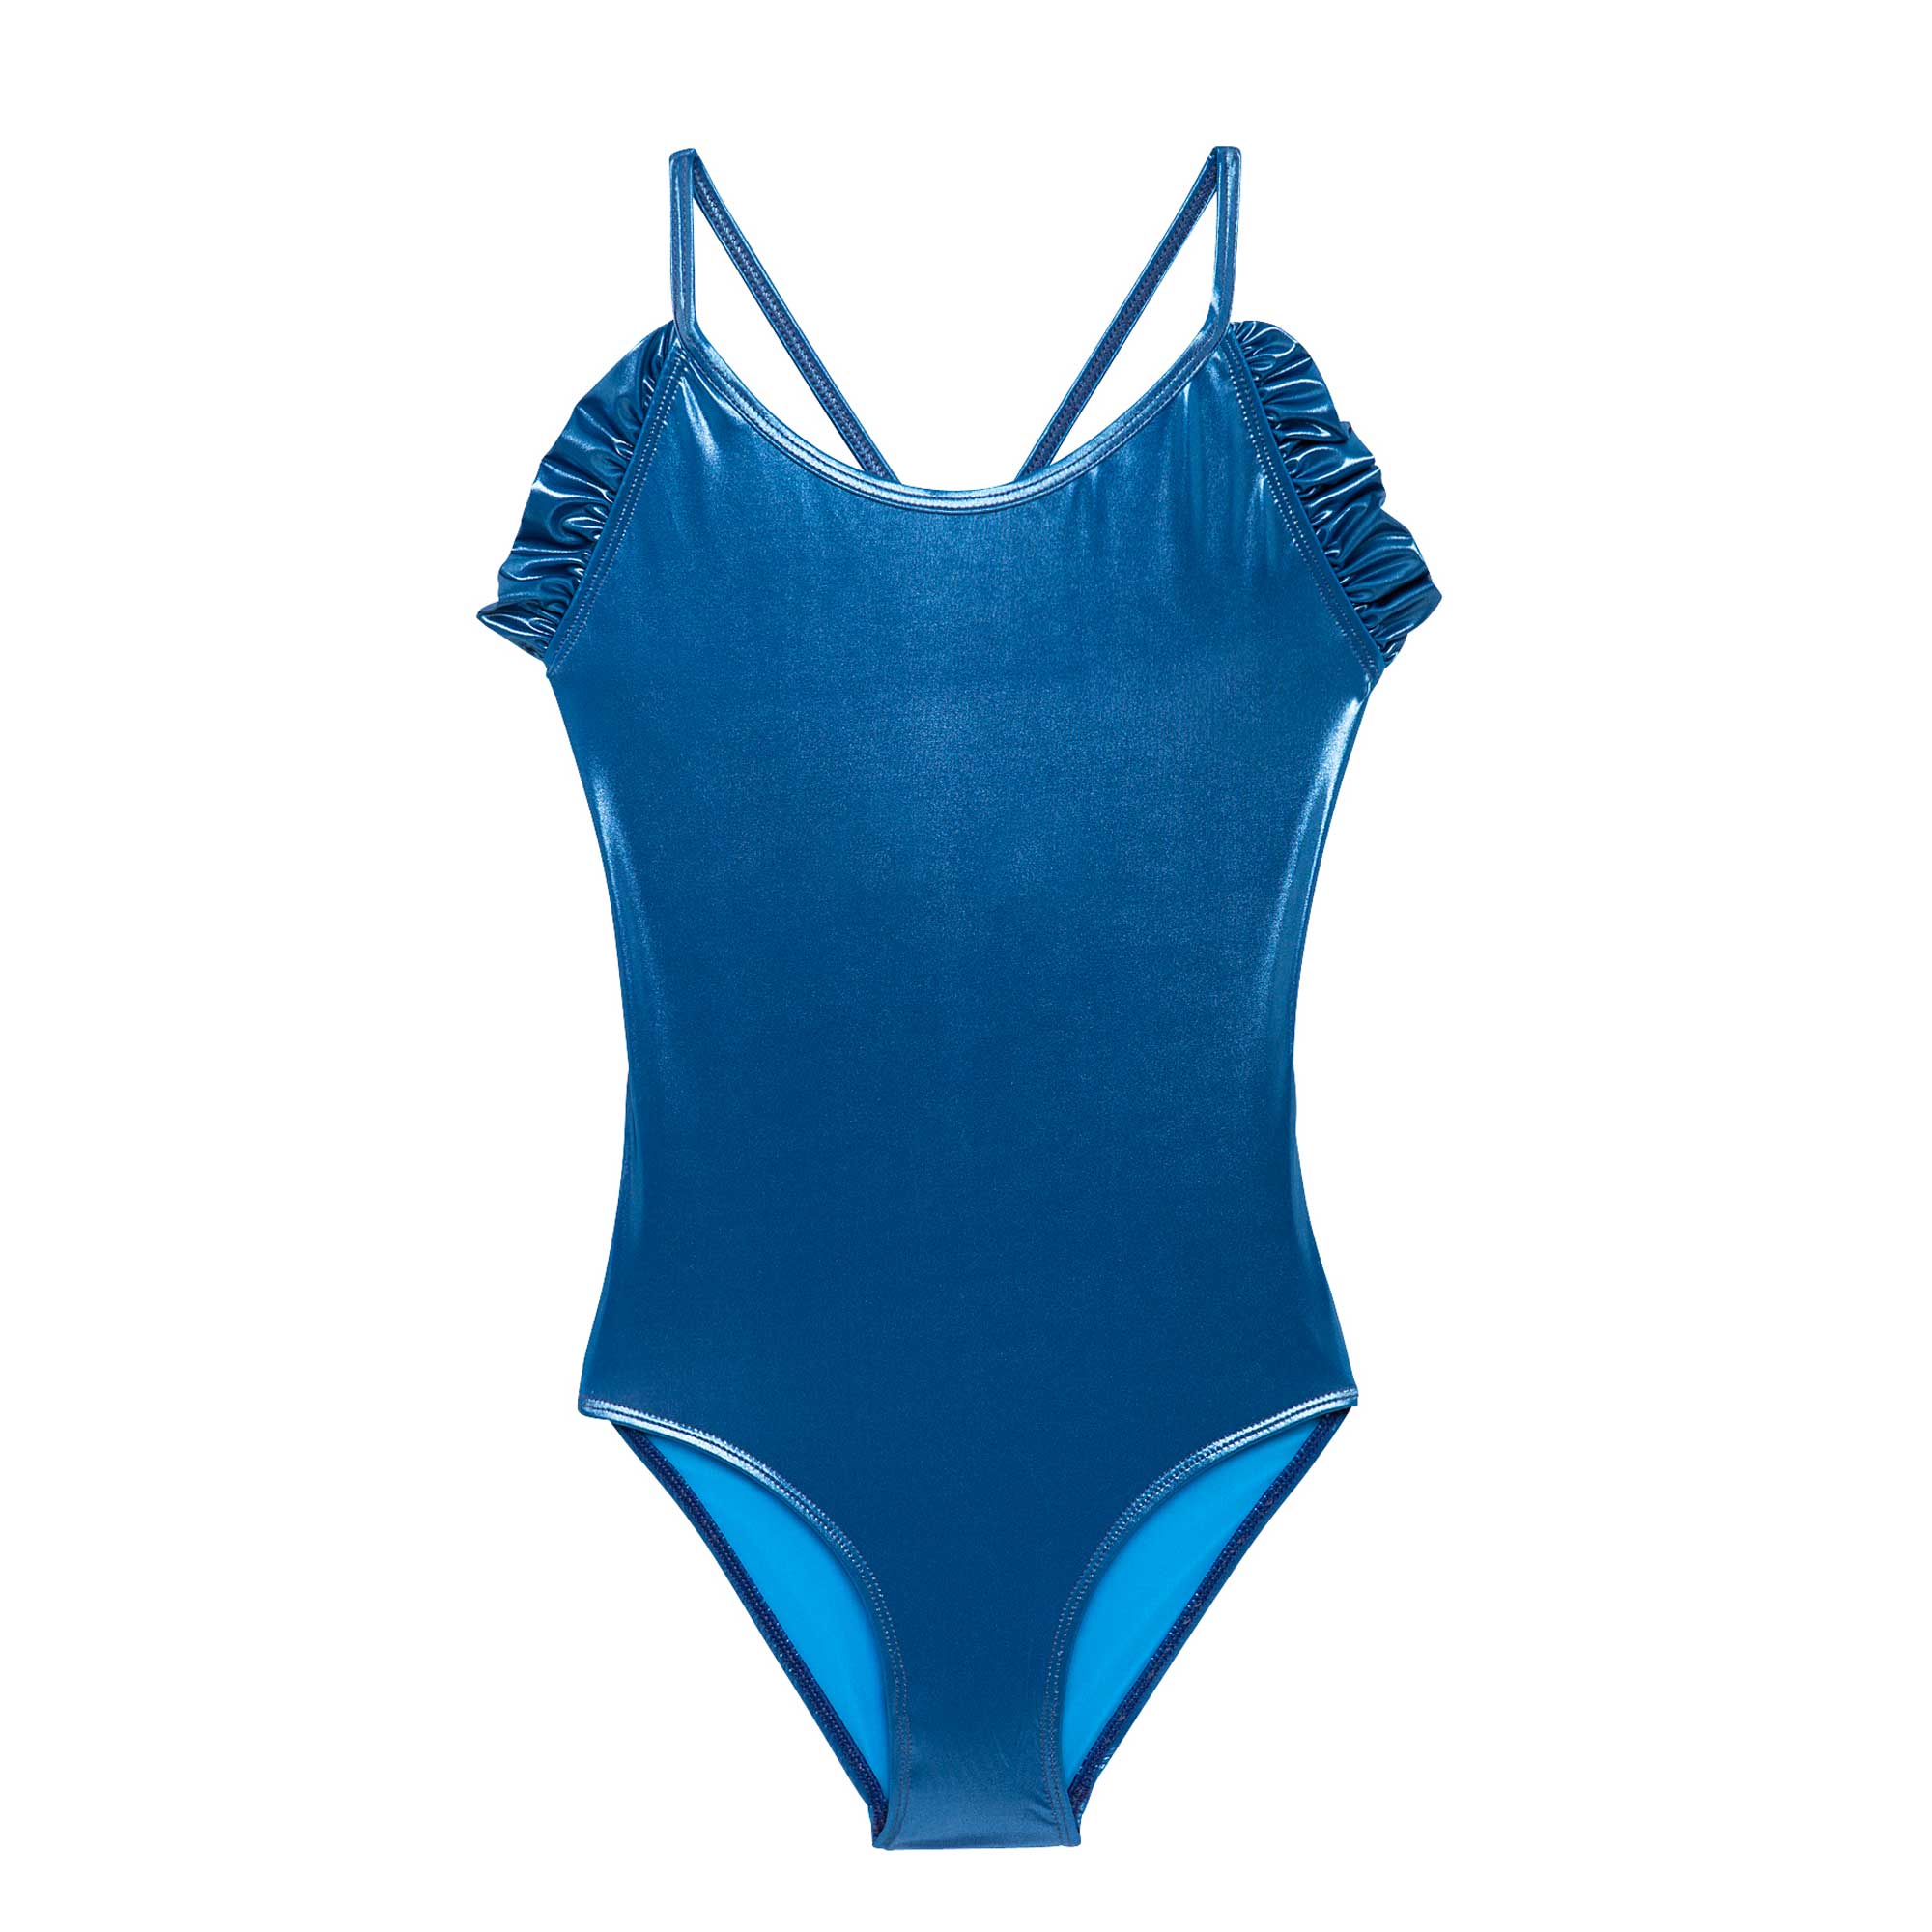 One-piece blue iridescent swimsuit